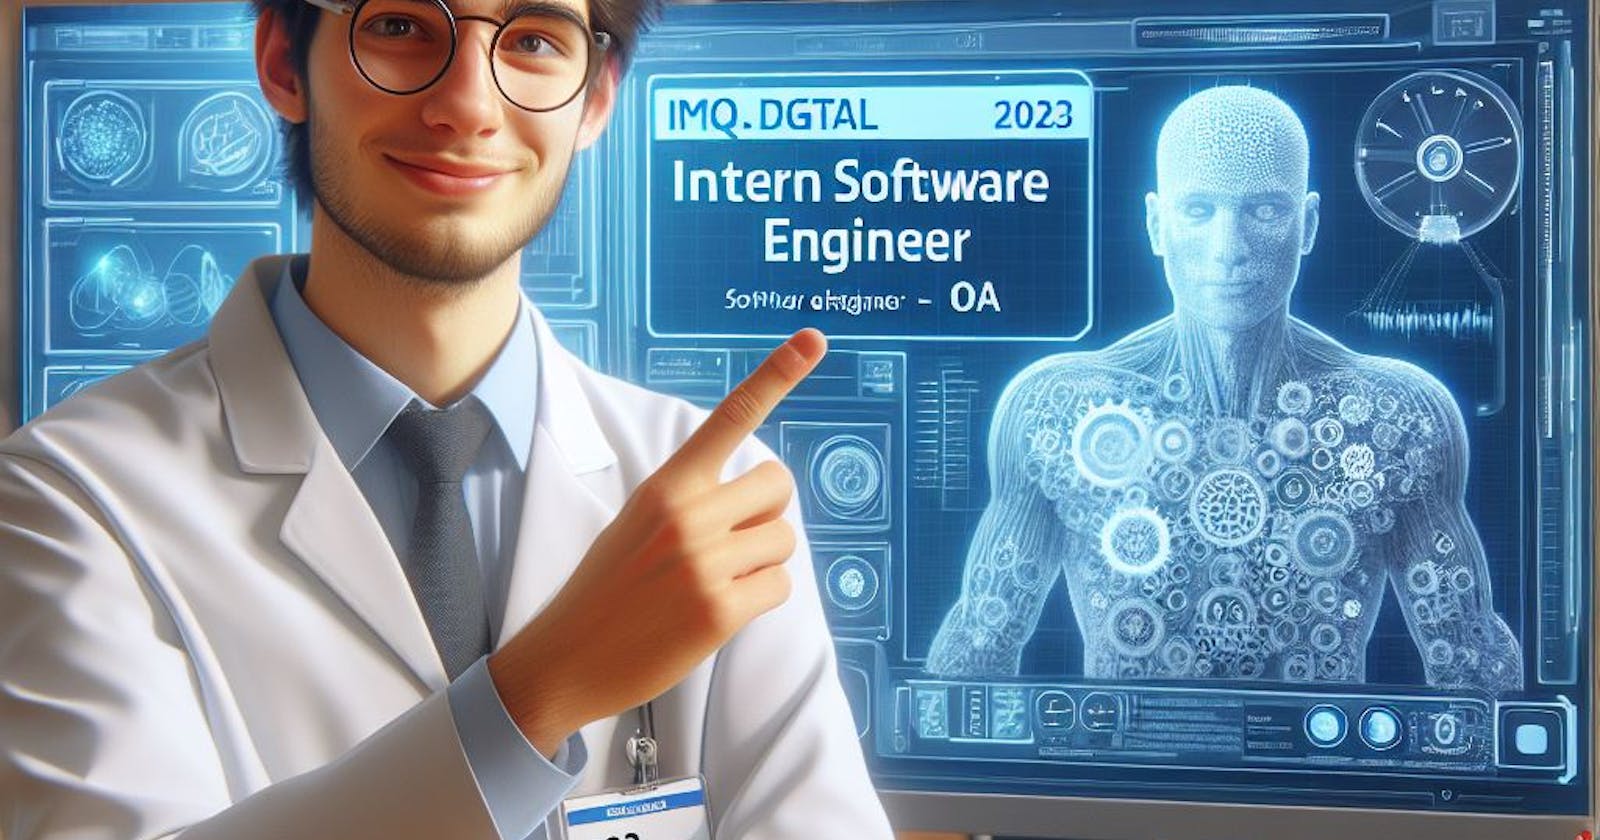 MiQ Digital Intern Software Engineer 2023 OA